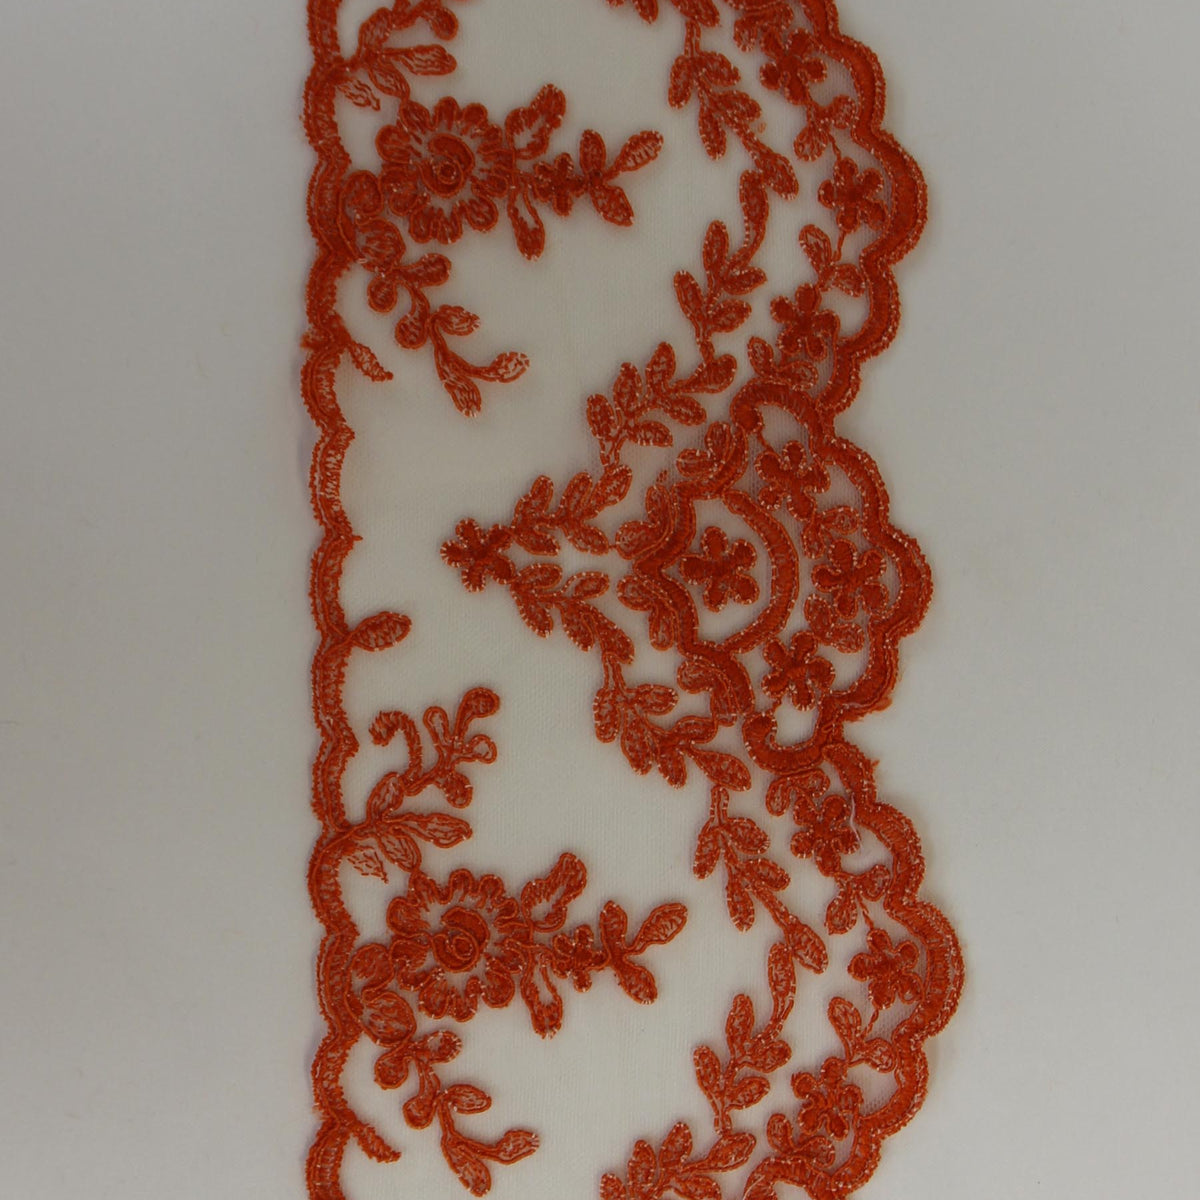 Embroidered Orange Lace